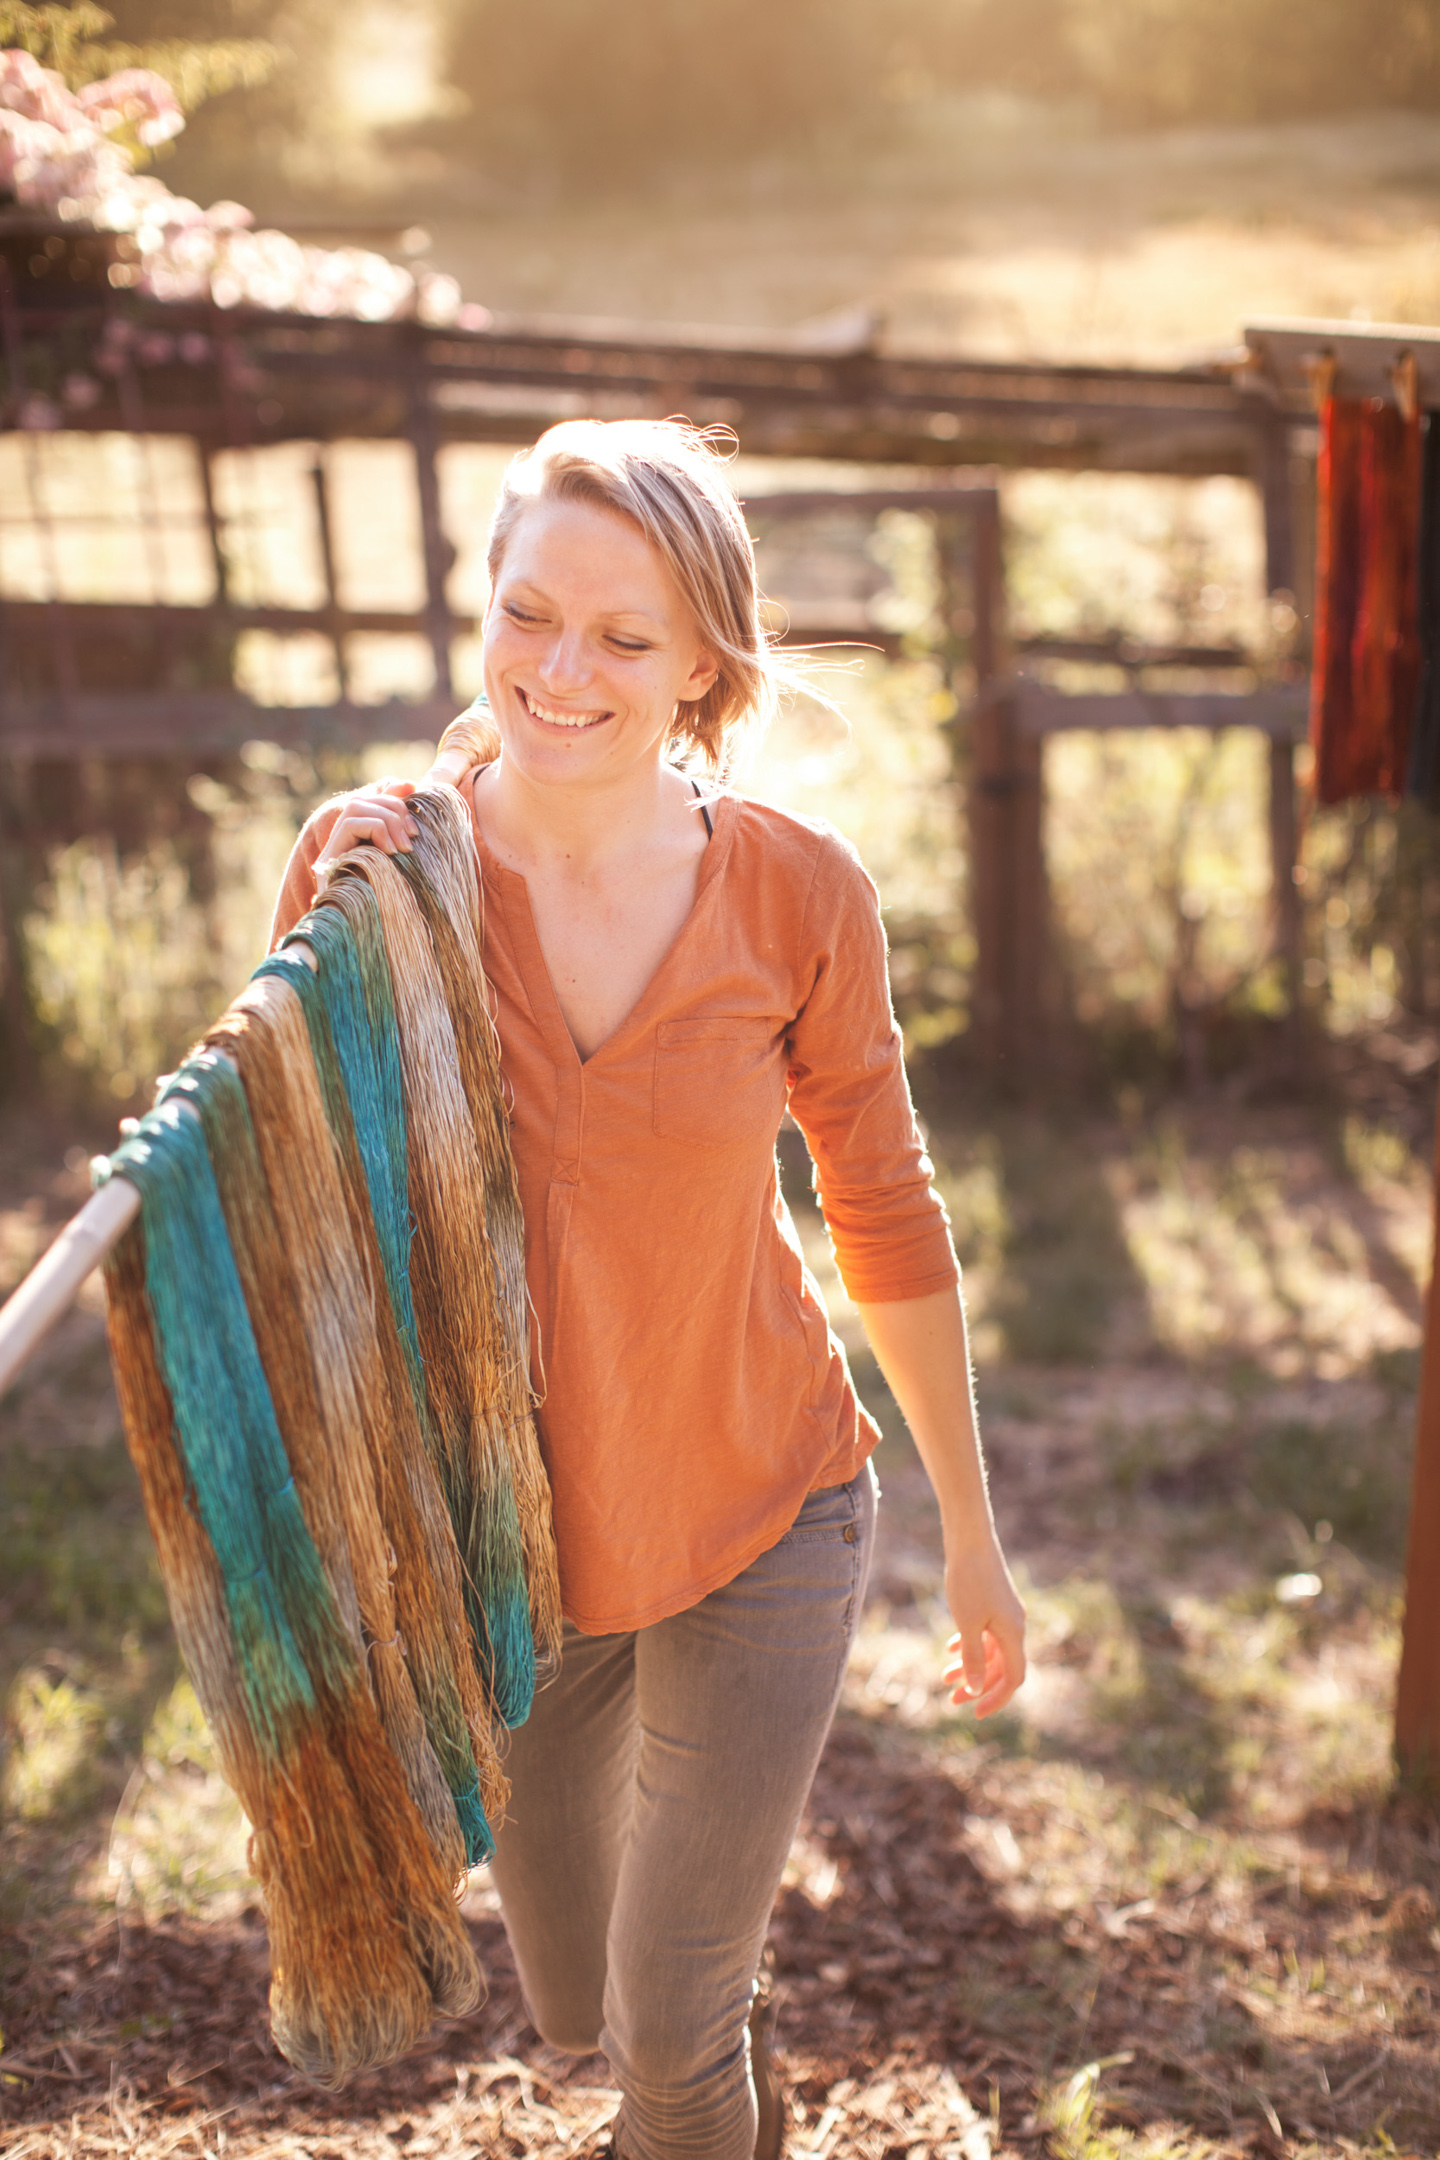 A woman carrying newly dyed yarn walks across a farmyard